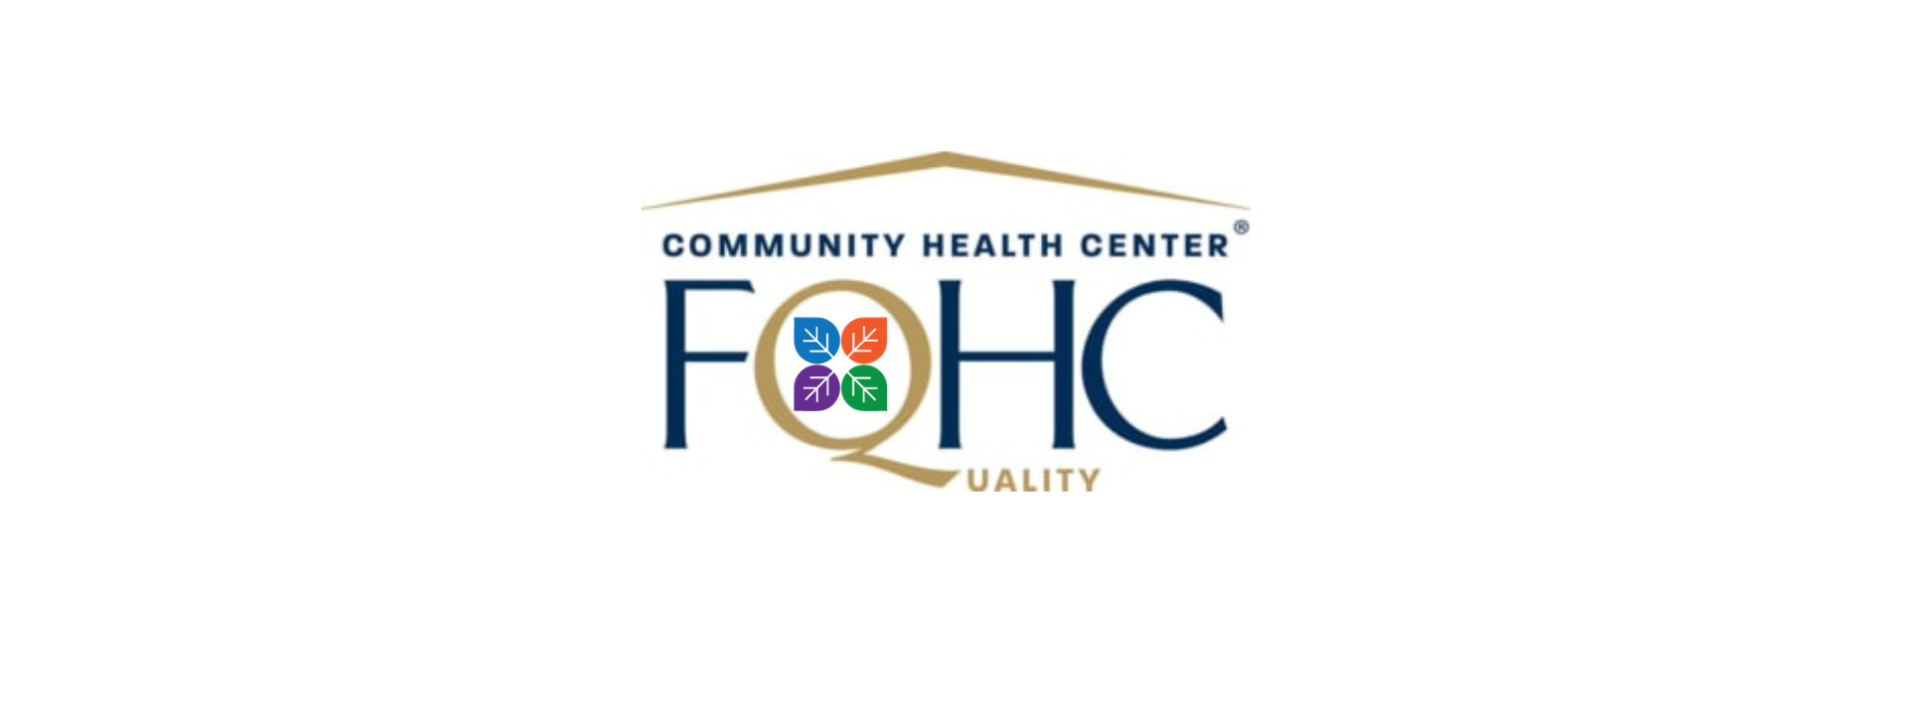 FQHC Logo with CIFC Health leaves